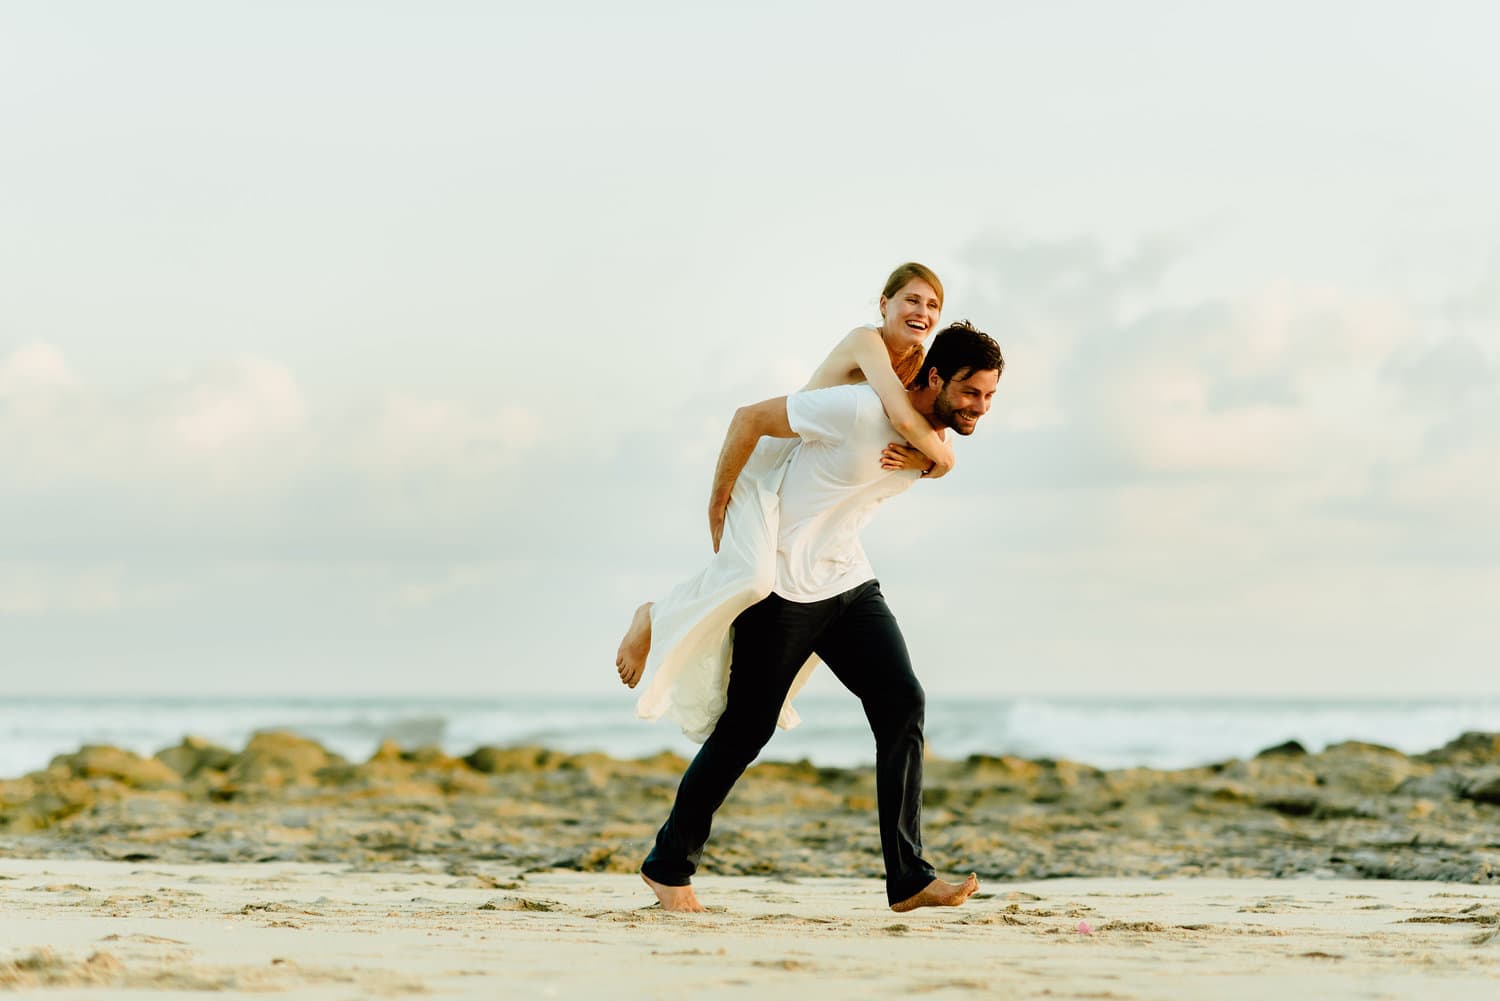 Groom gives bride a piggyback ride on the beach in Santa Teresa, Costa Rica.